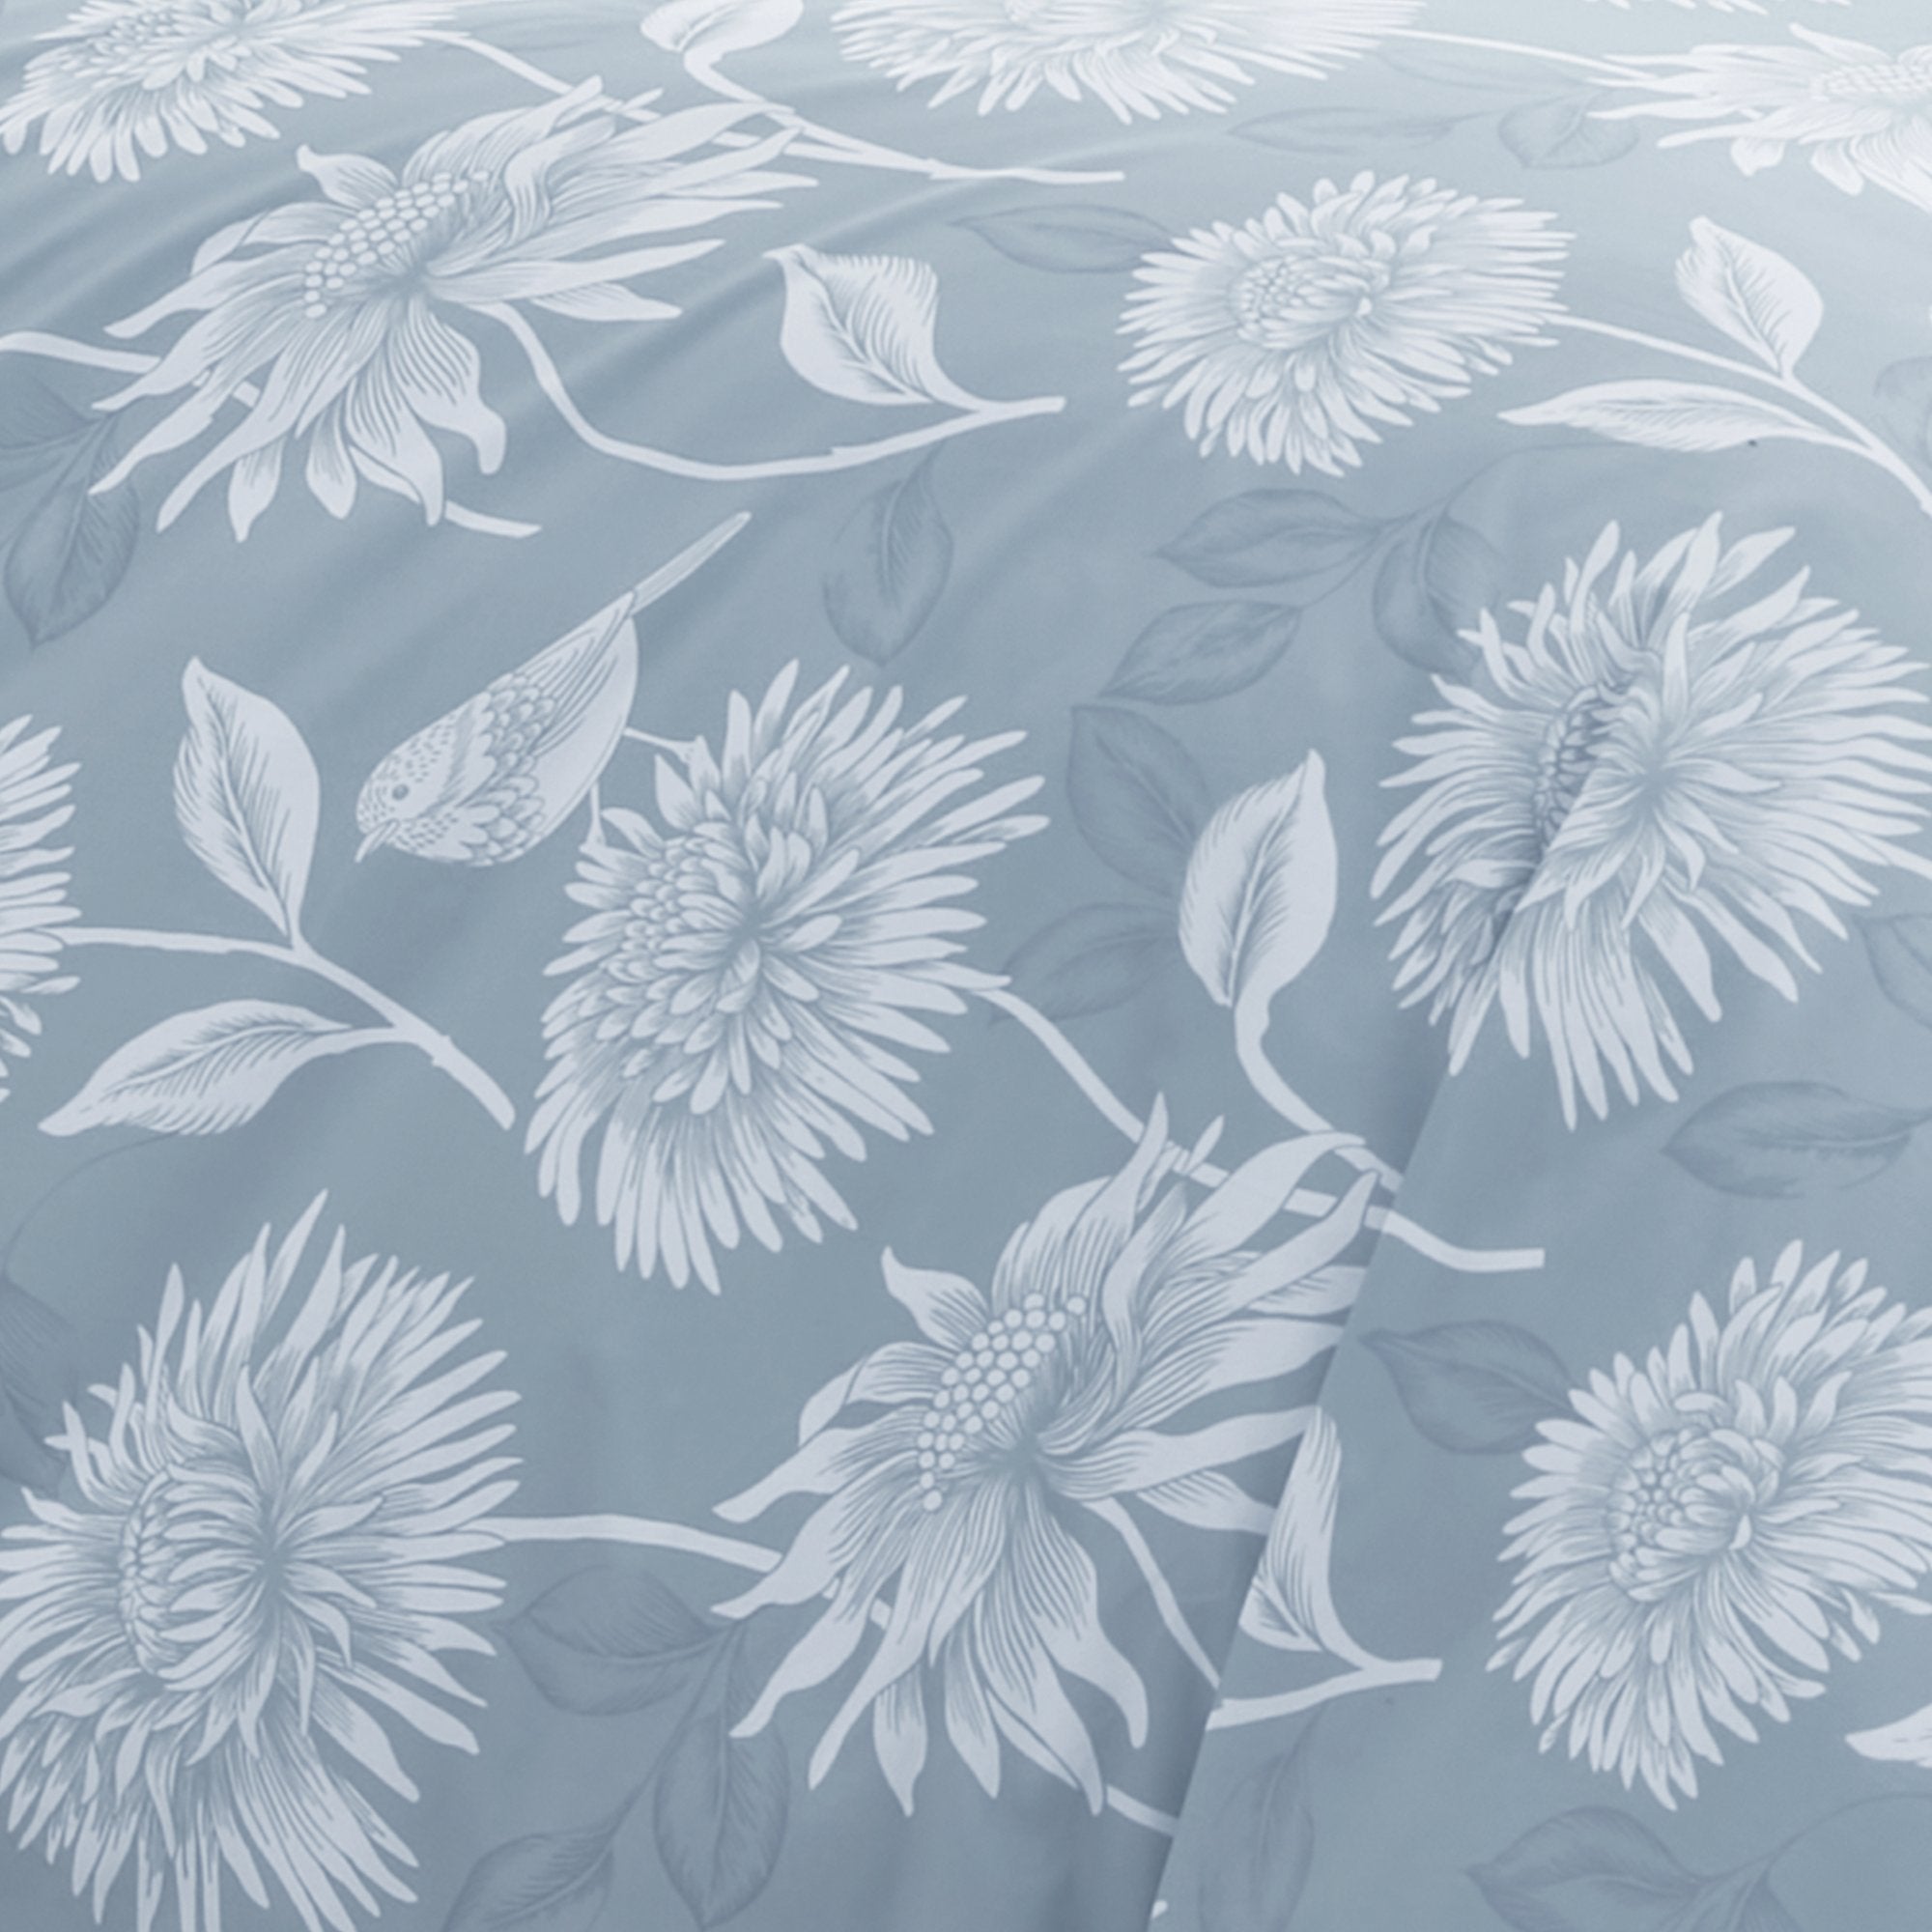 Duvet Cover Set Chrysanthemum by Dreams & Drapes Design in Blue